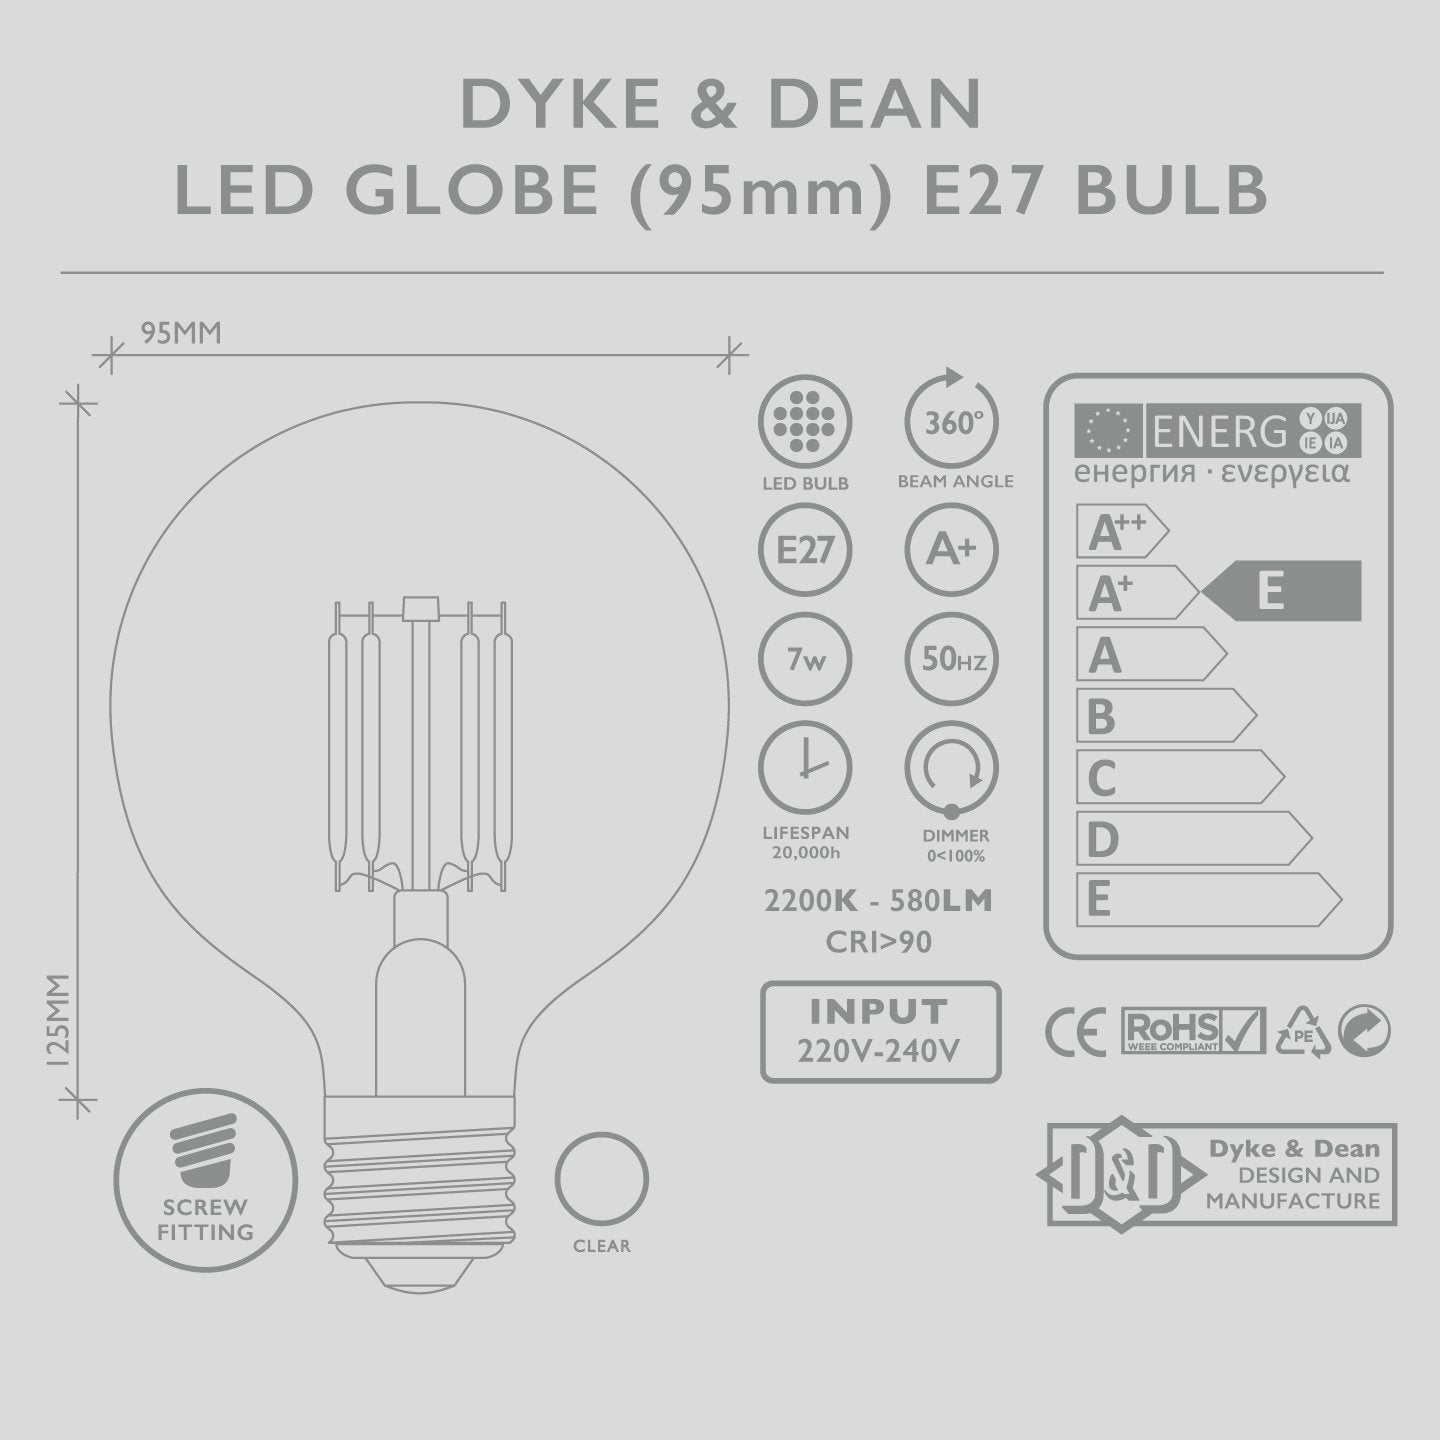 DYKE & DEAN LED GLOBE 95MM E27 BULB - DYKE & DEAN